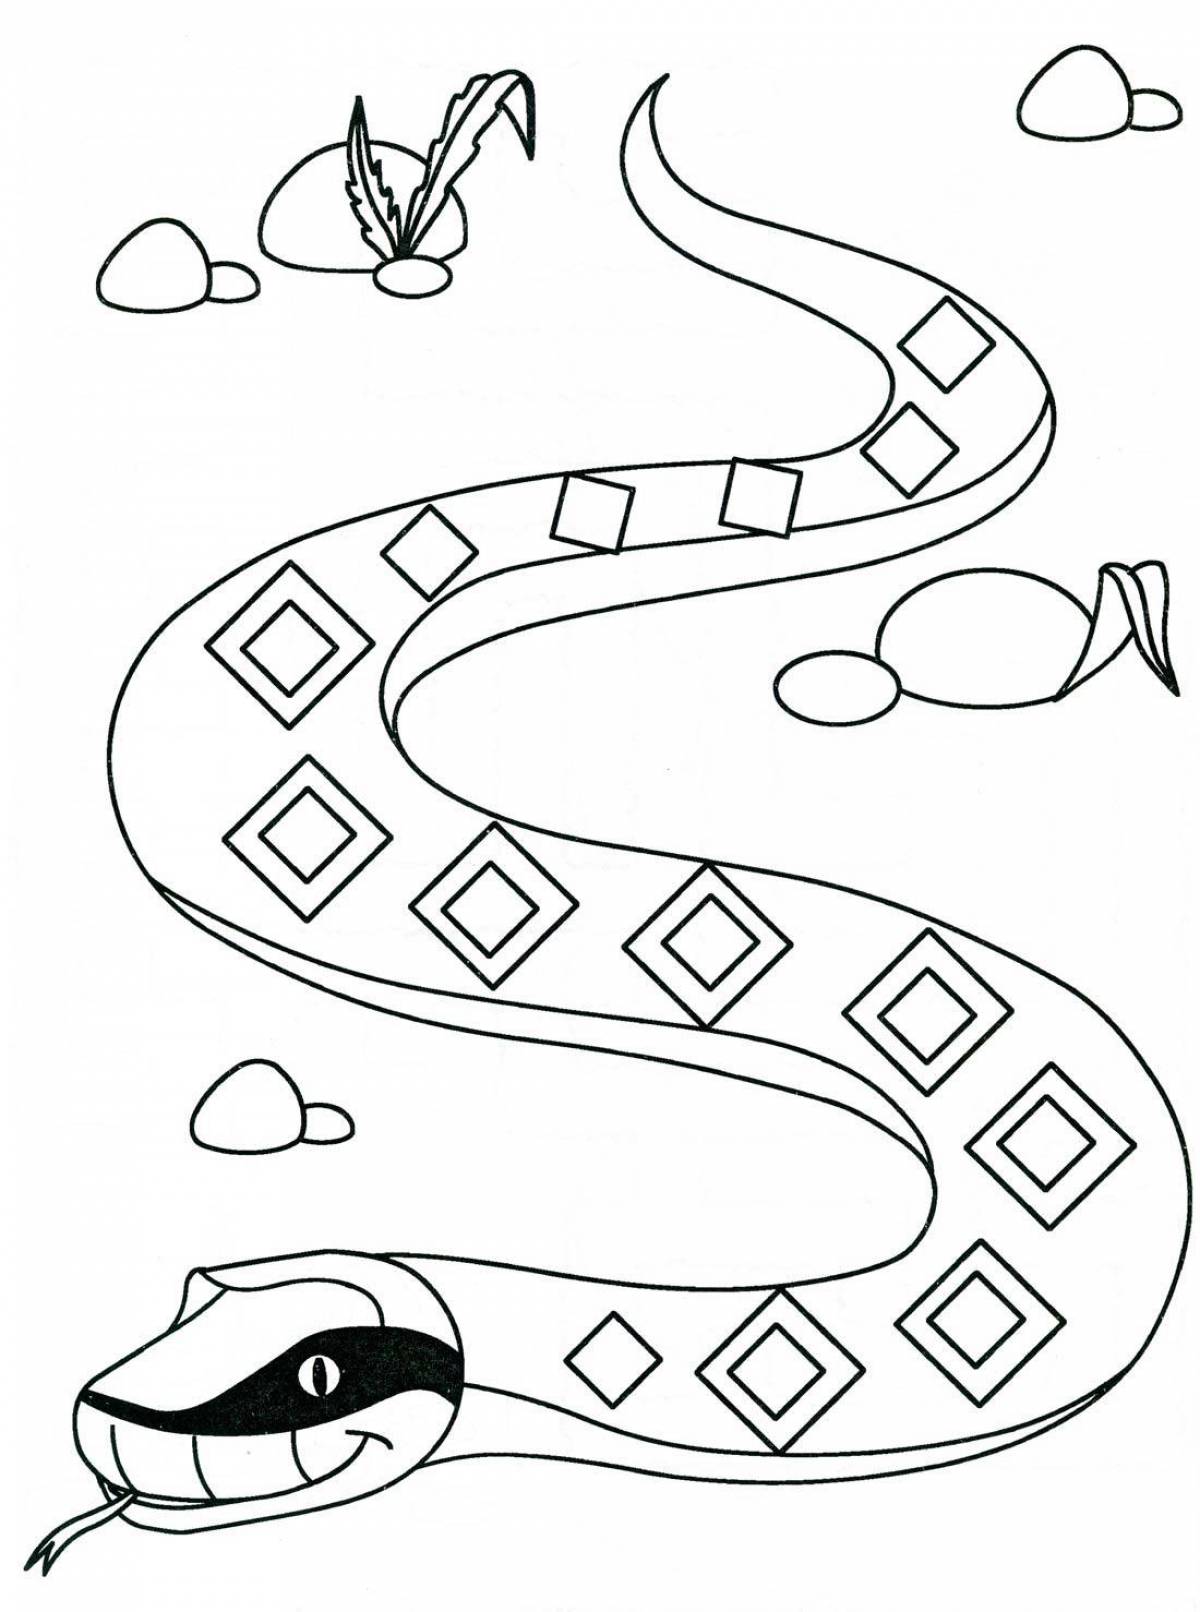 Задания про змей. Змея раскраска. Змея раскраска для детей. Раскраски змей. Раскраска змеи для детей.